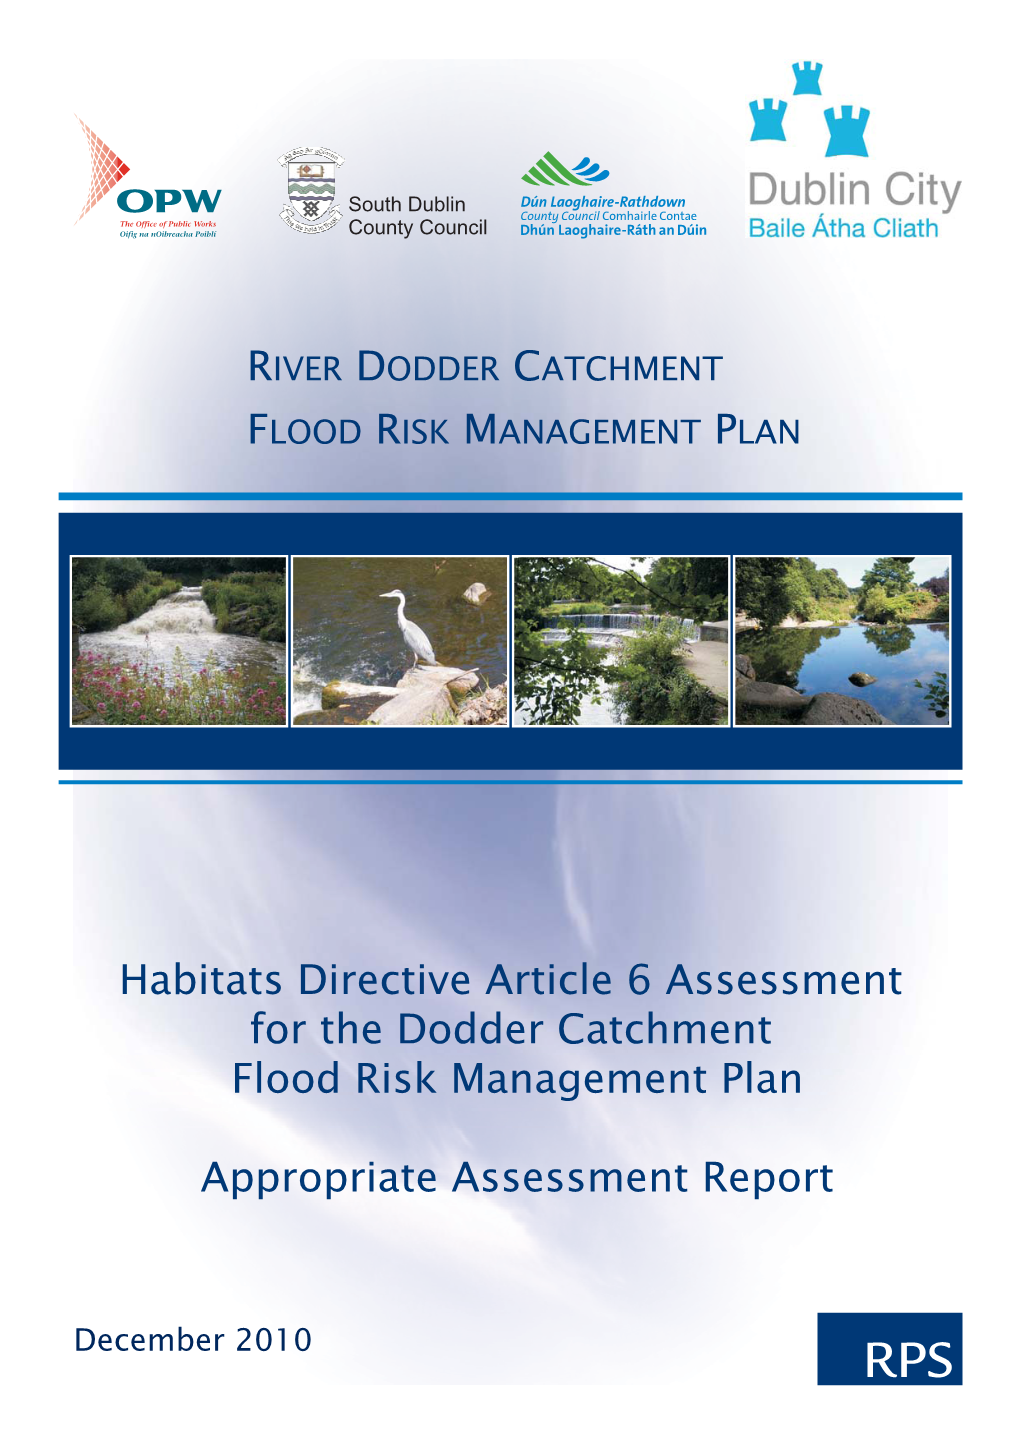 Habitats Directive Article 6 Assessment for the Dodder Catchment Flood Risk Management Plan